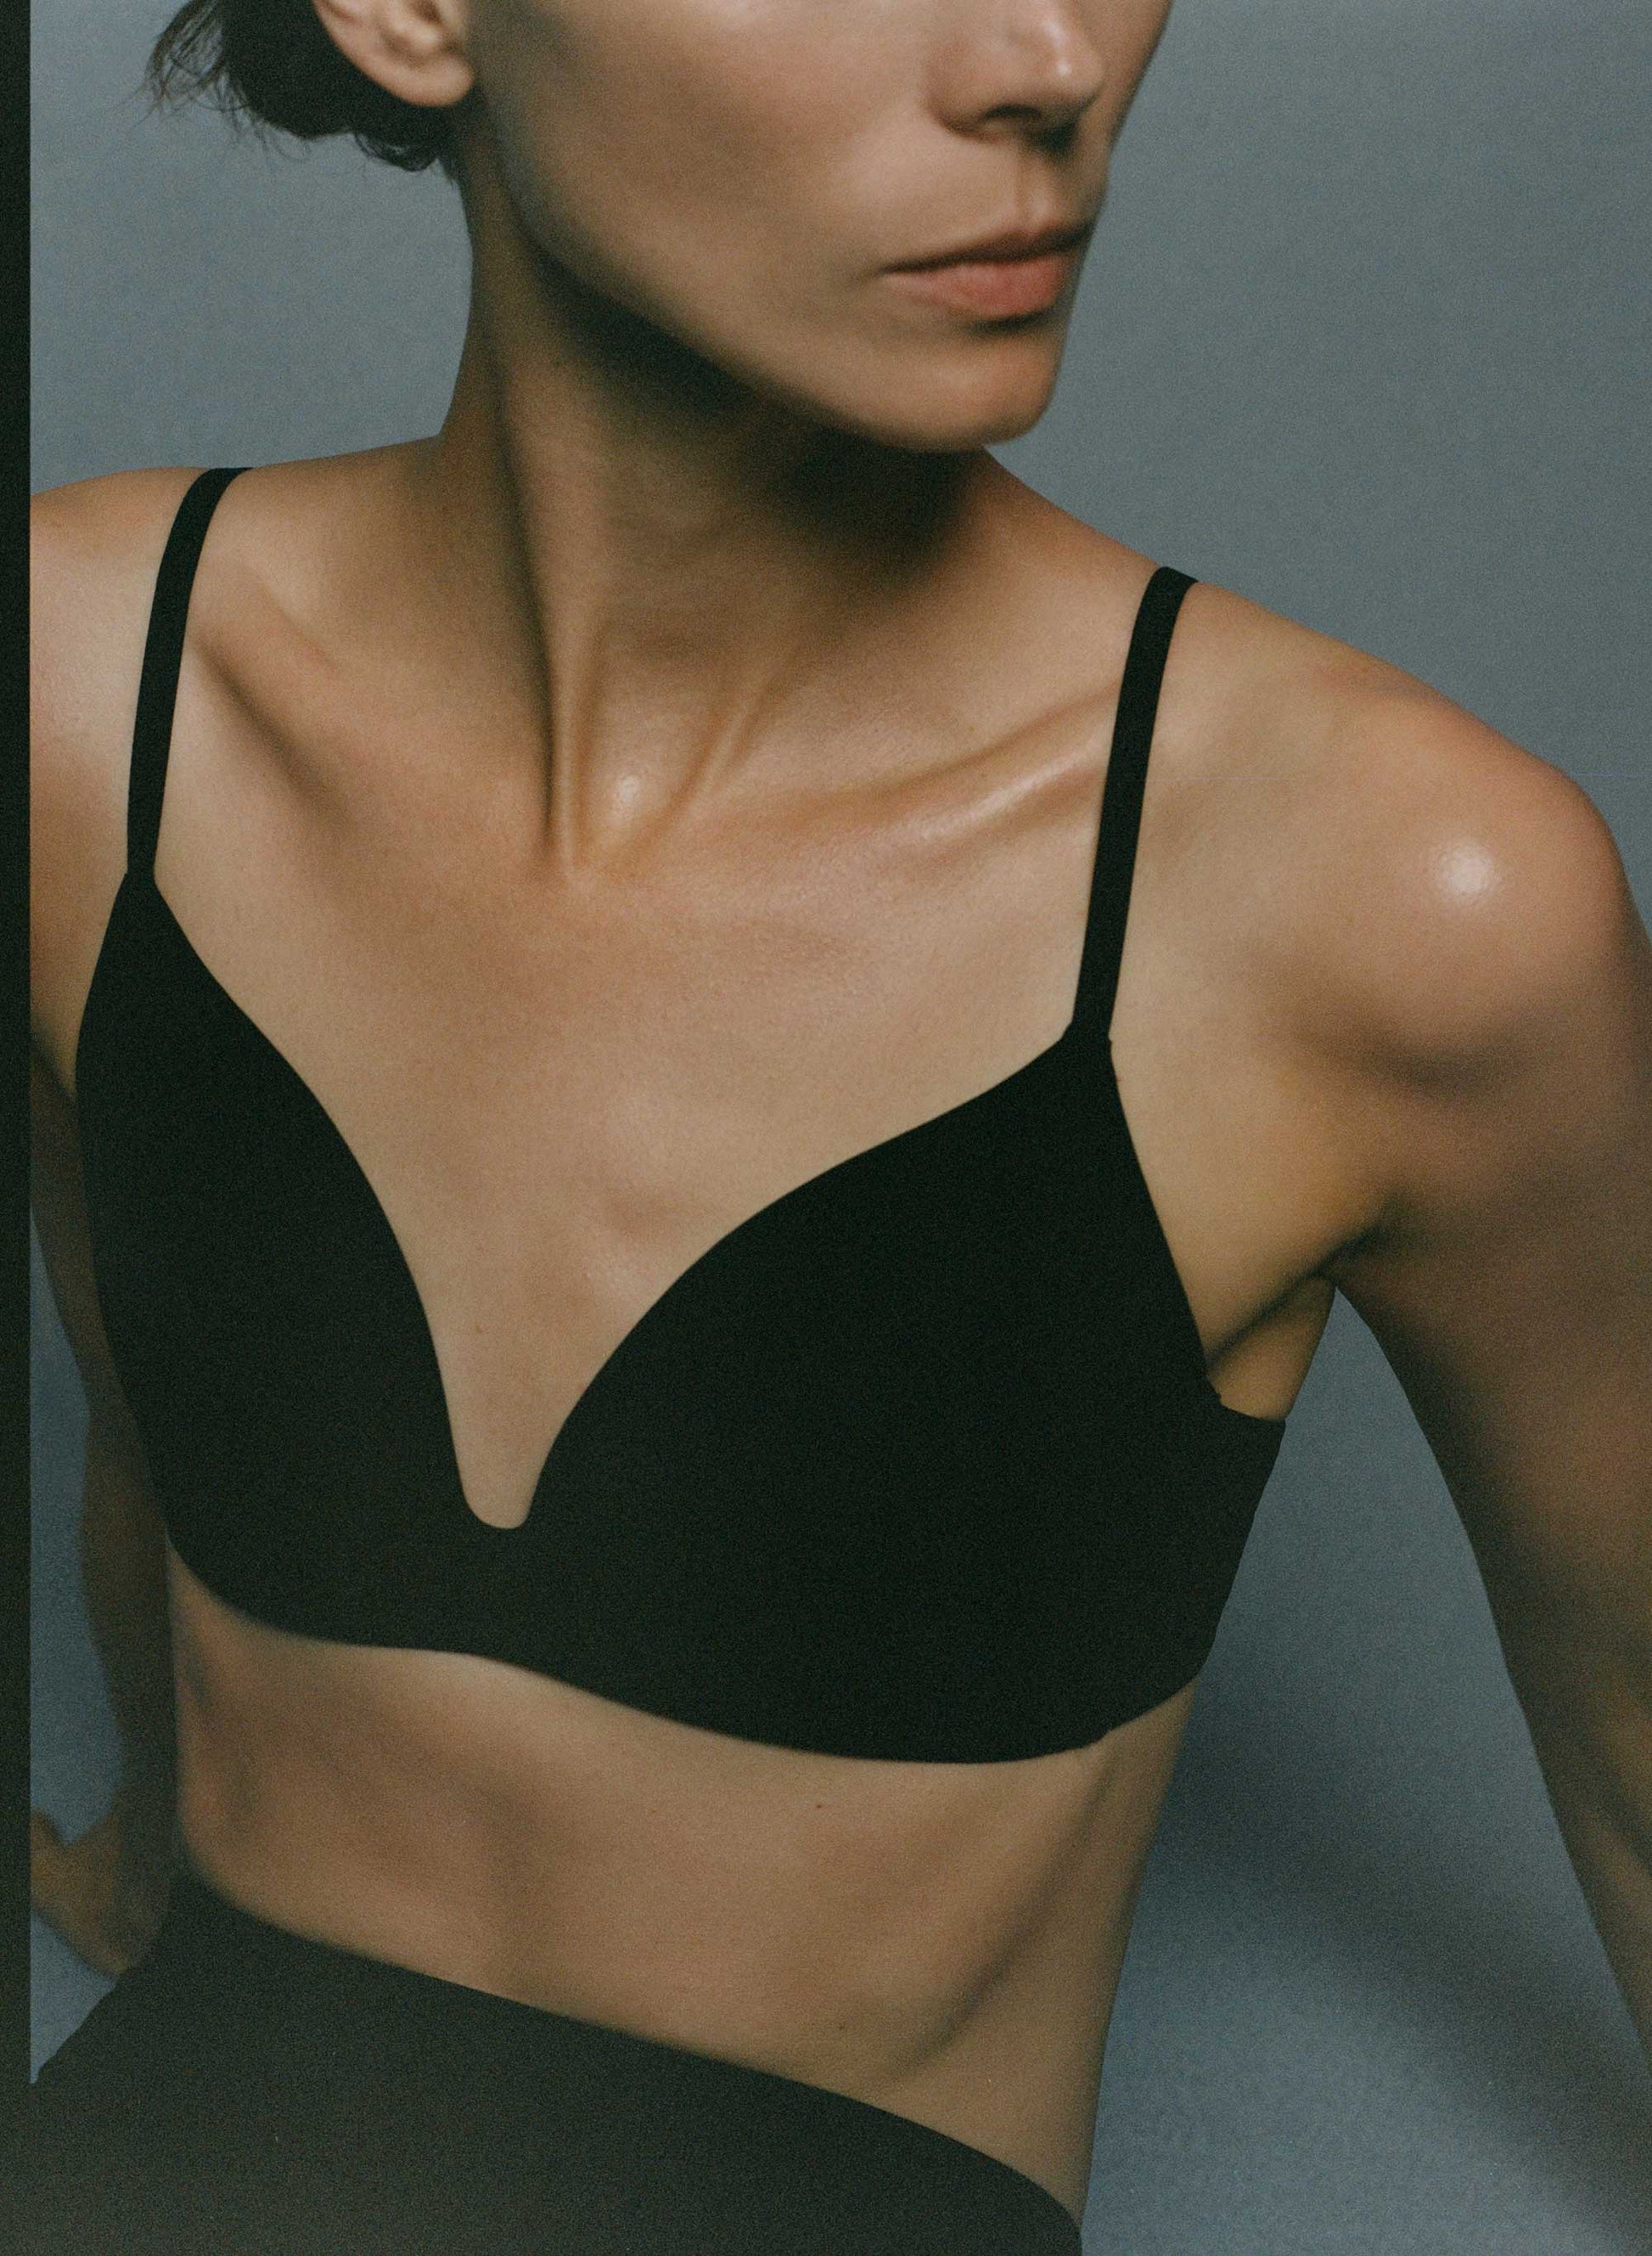 A woman wearing a black triangle bra